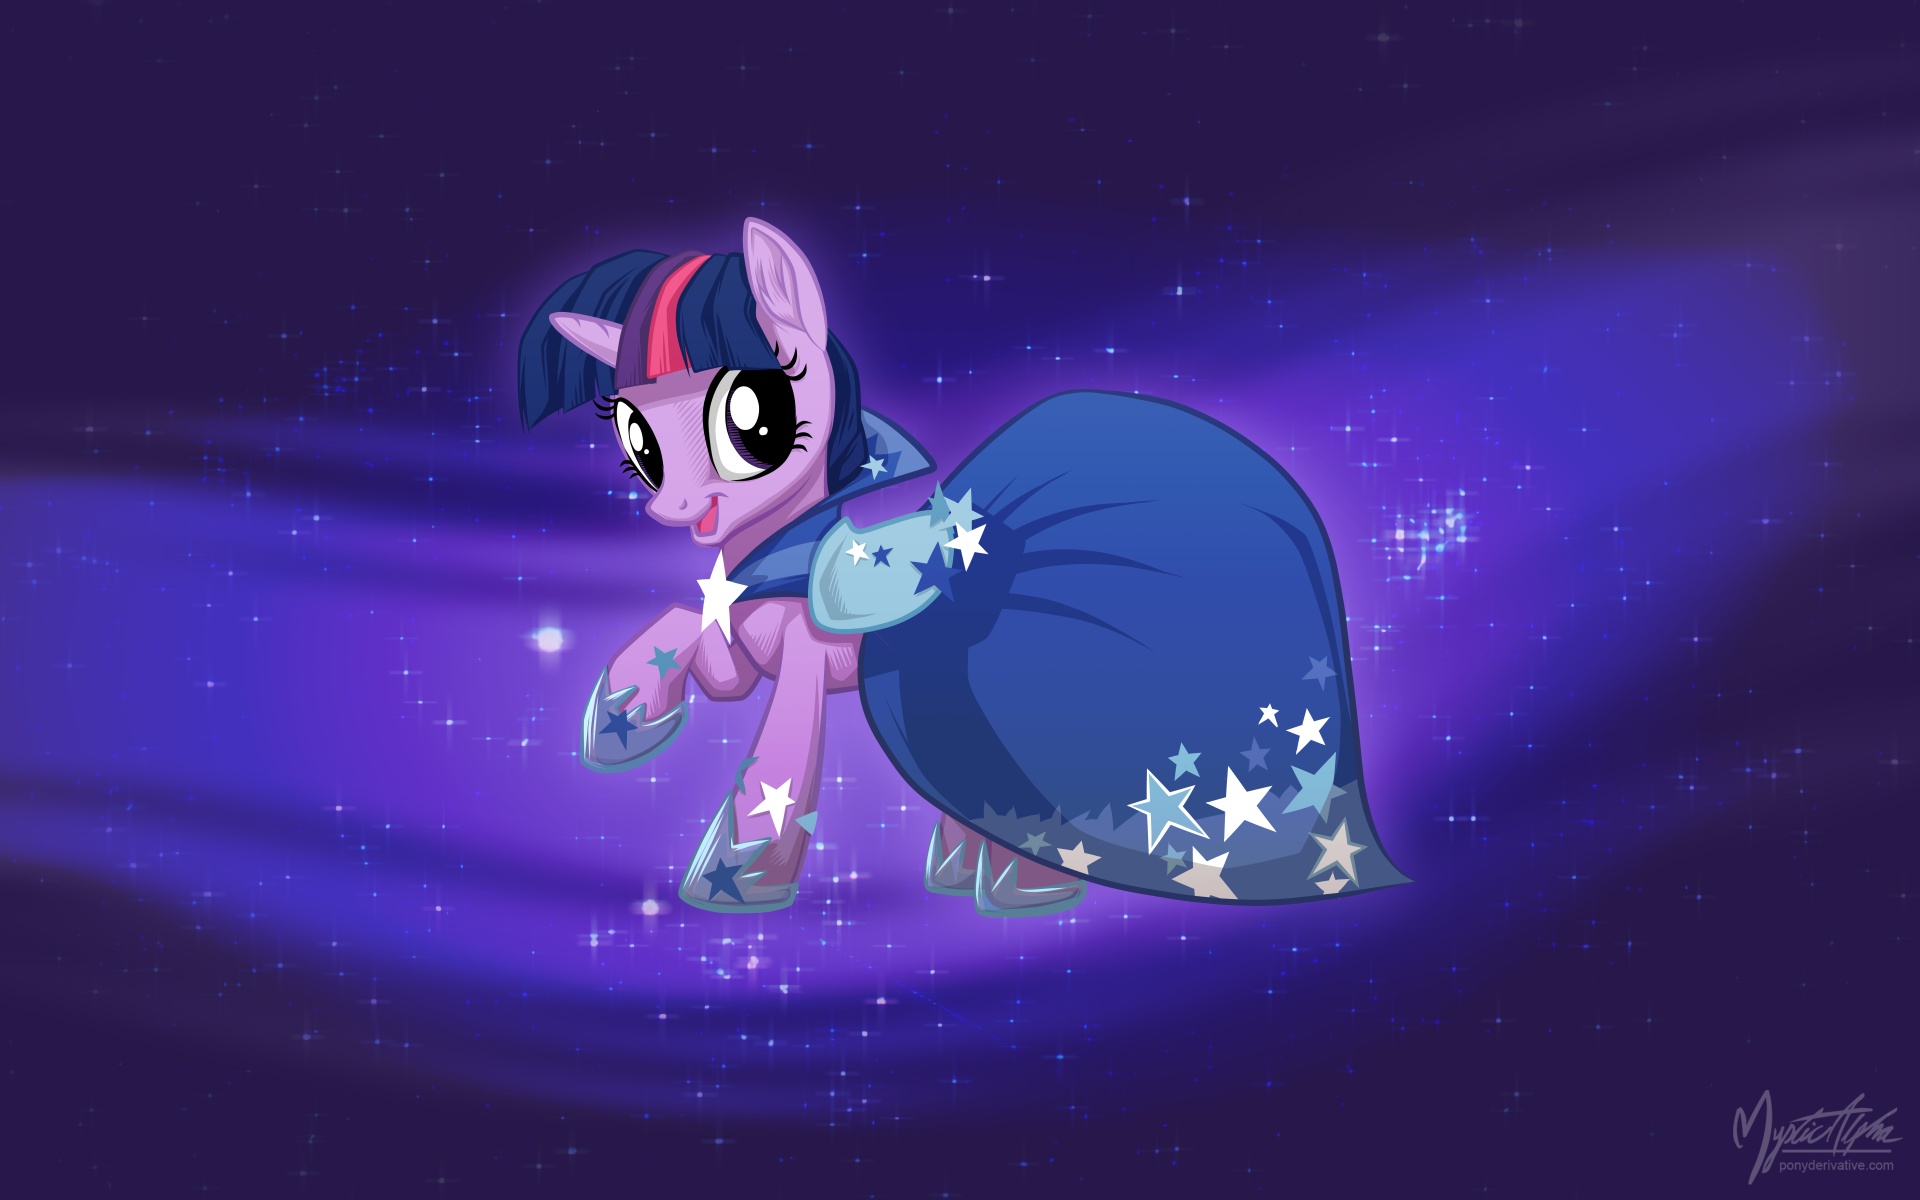 Twilight Sparkle in Gala Dress by mysticalpha